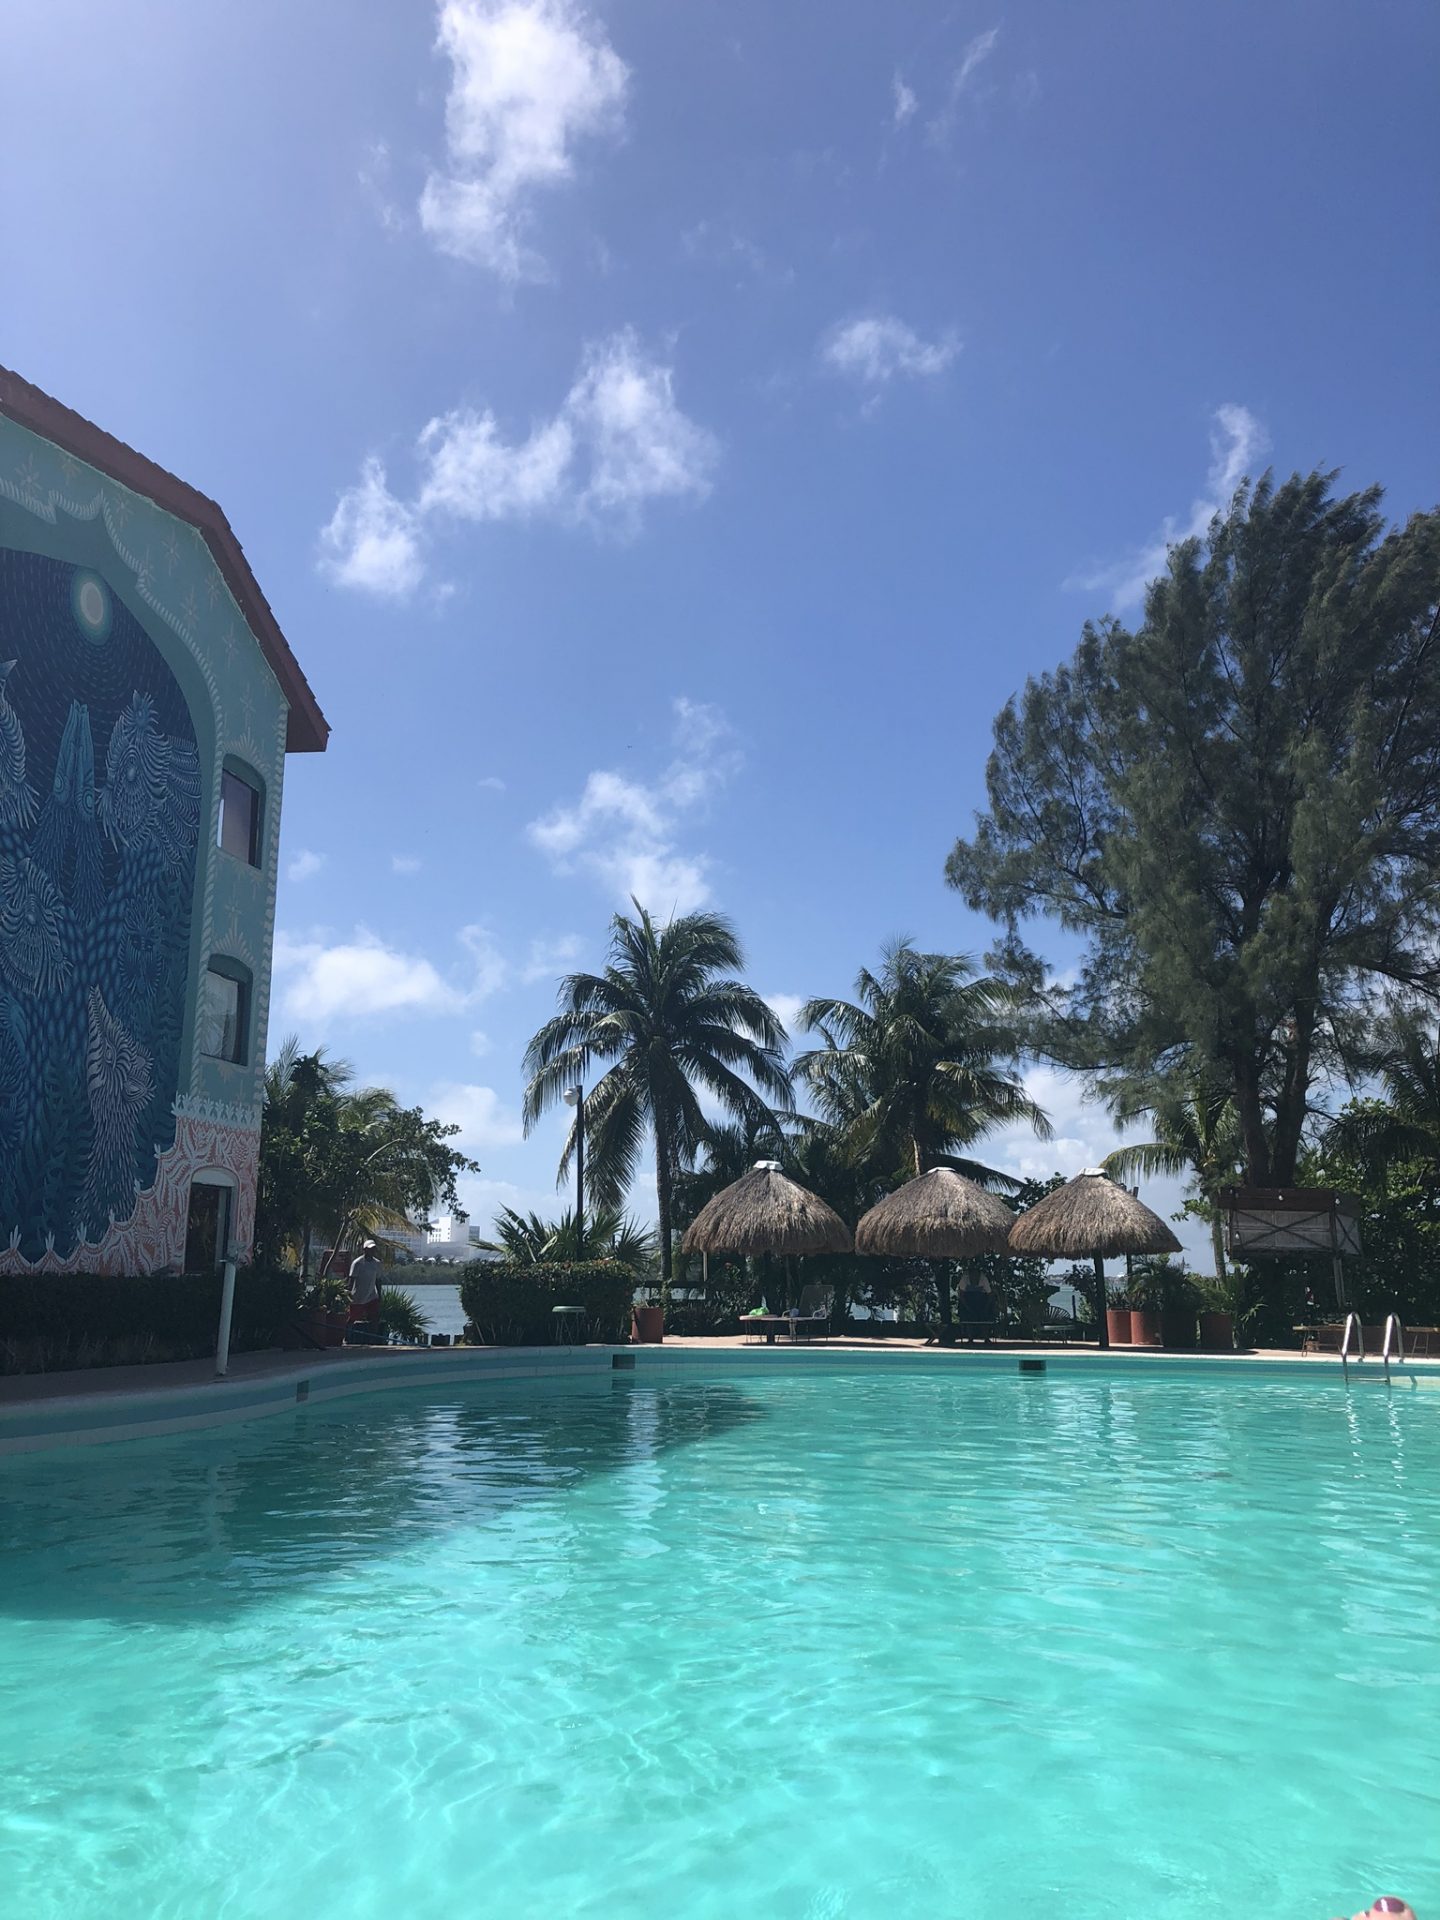 The pool at Selina, Cancun